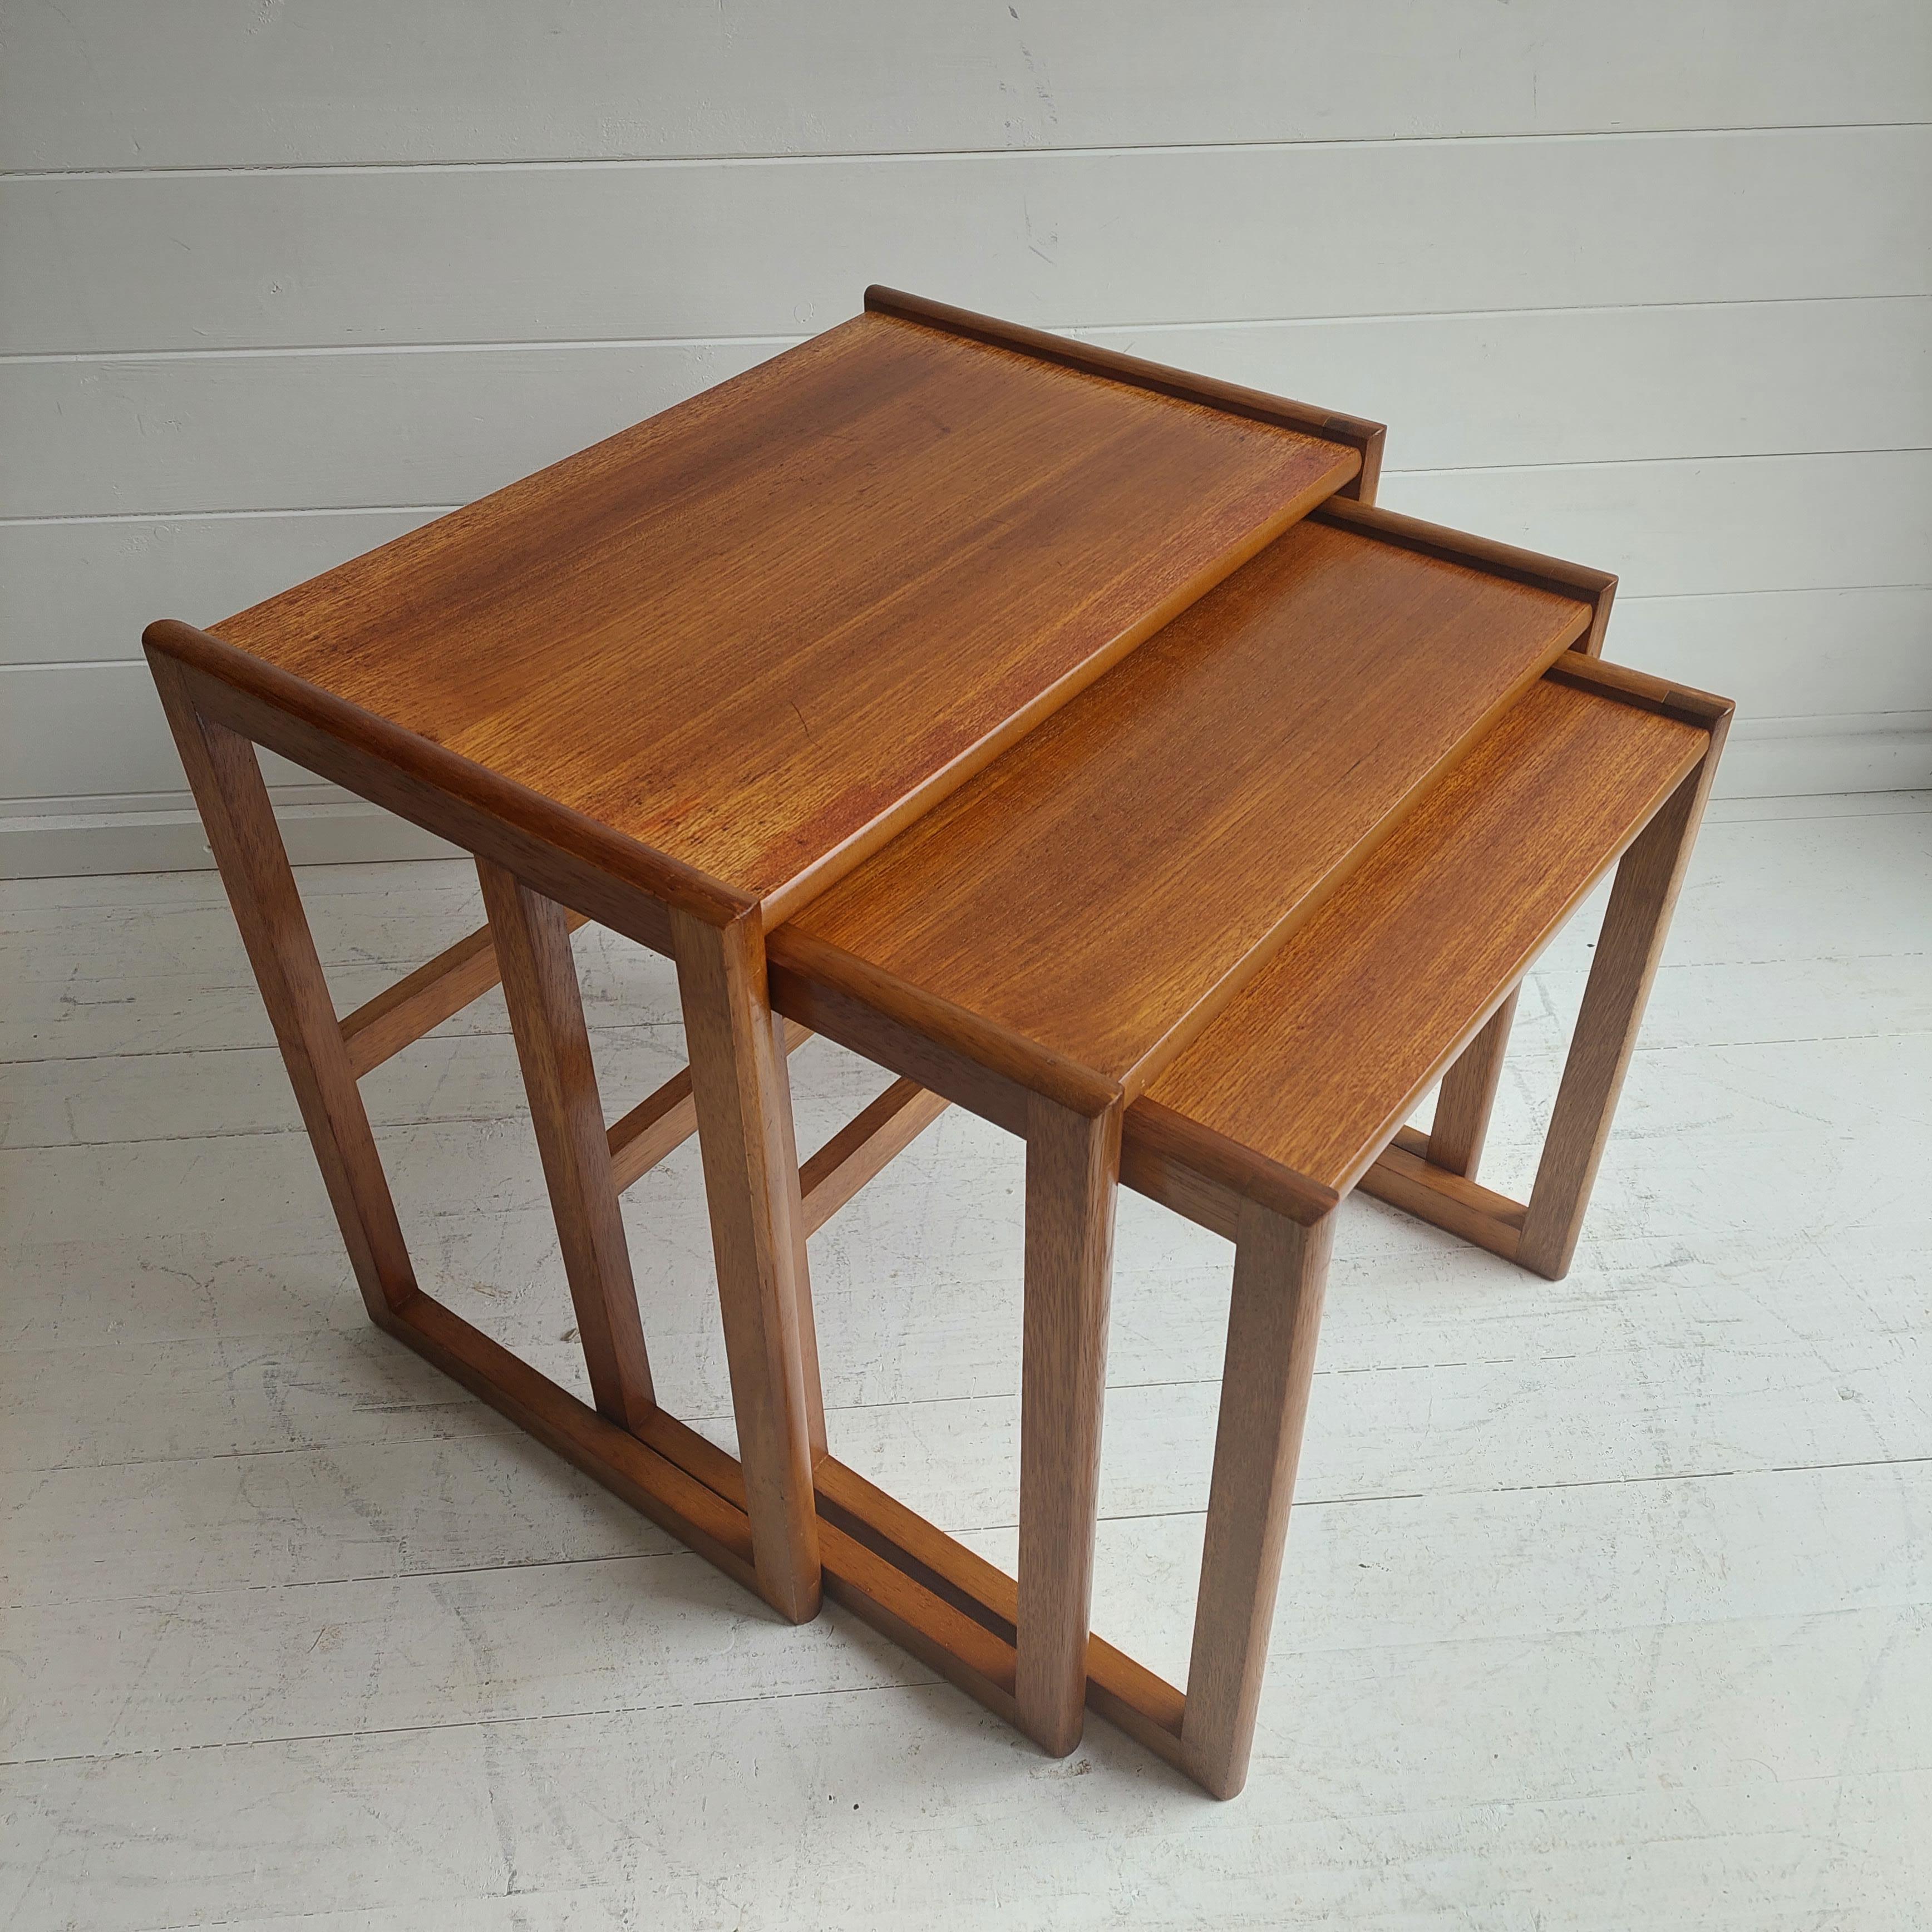 British Mid Century Teak Nest of Tables DAnish G Plan Style, 60s